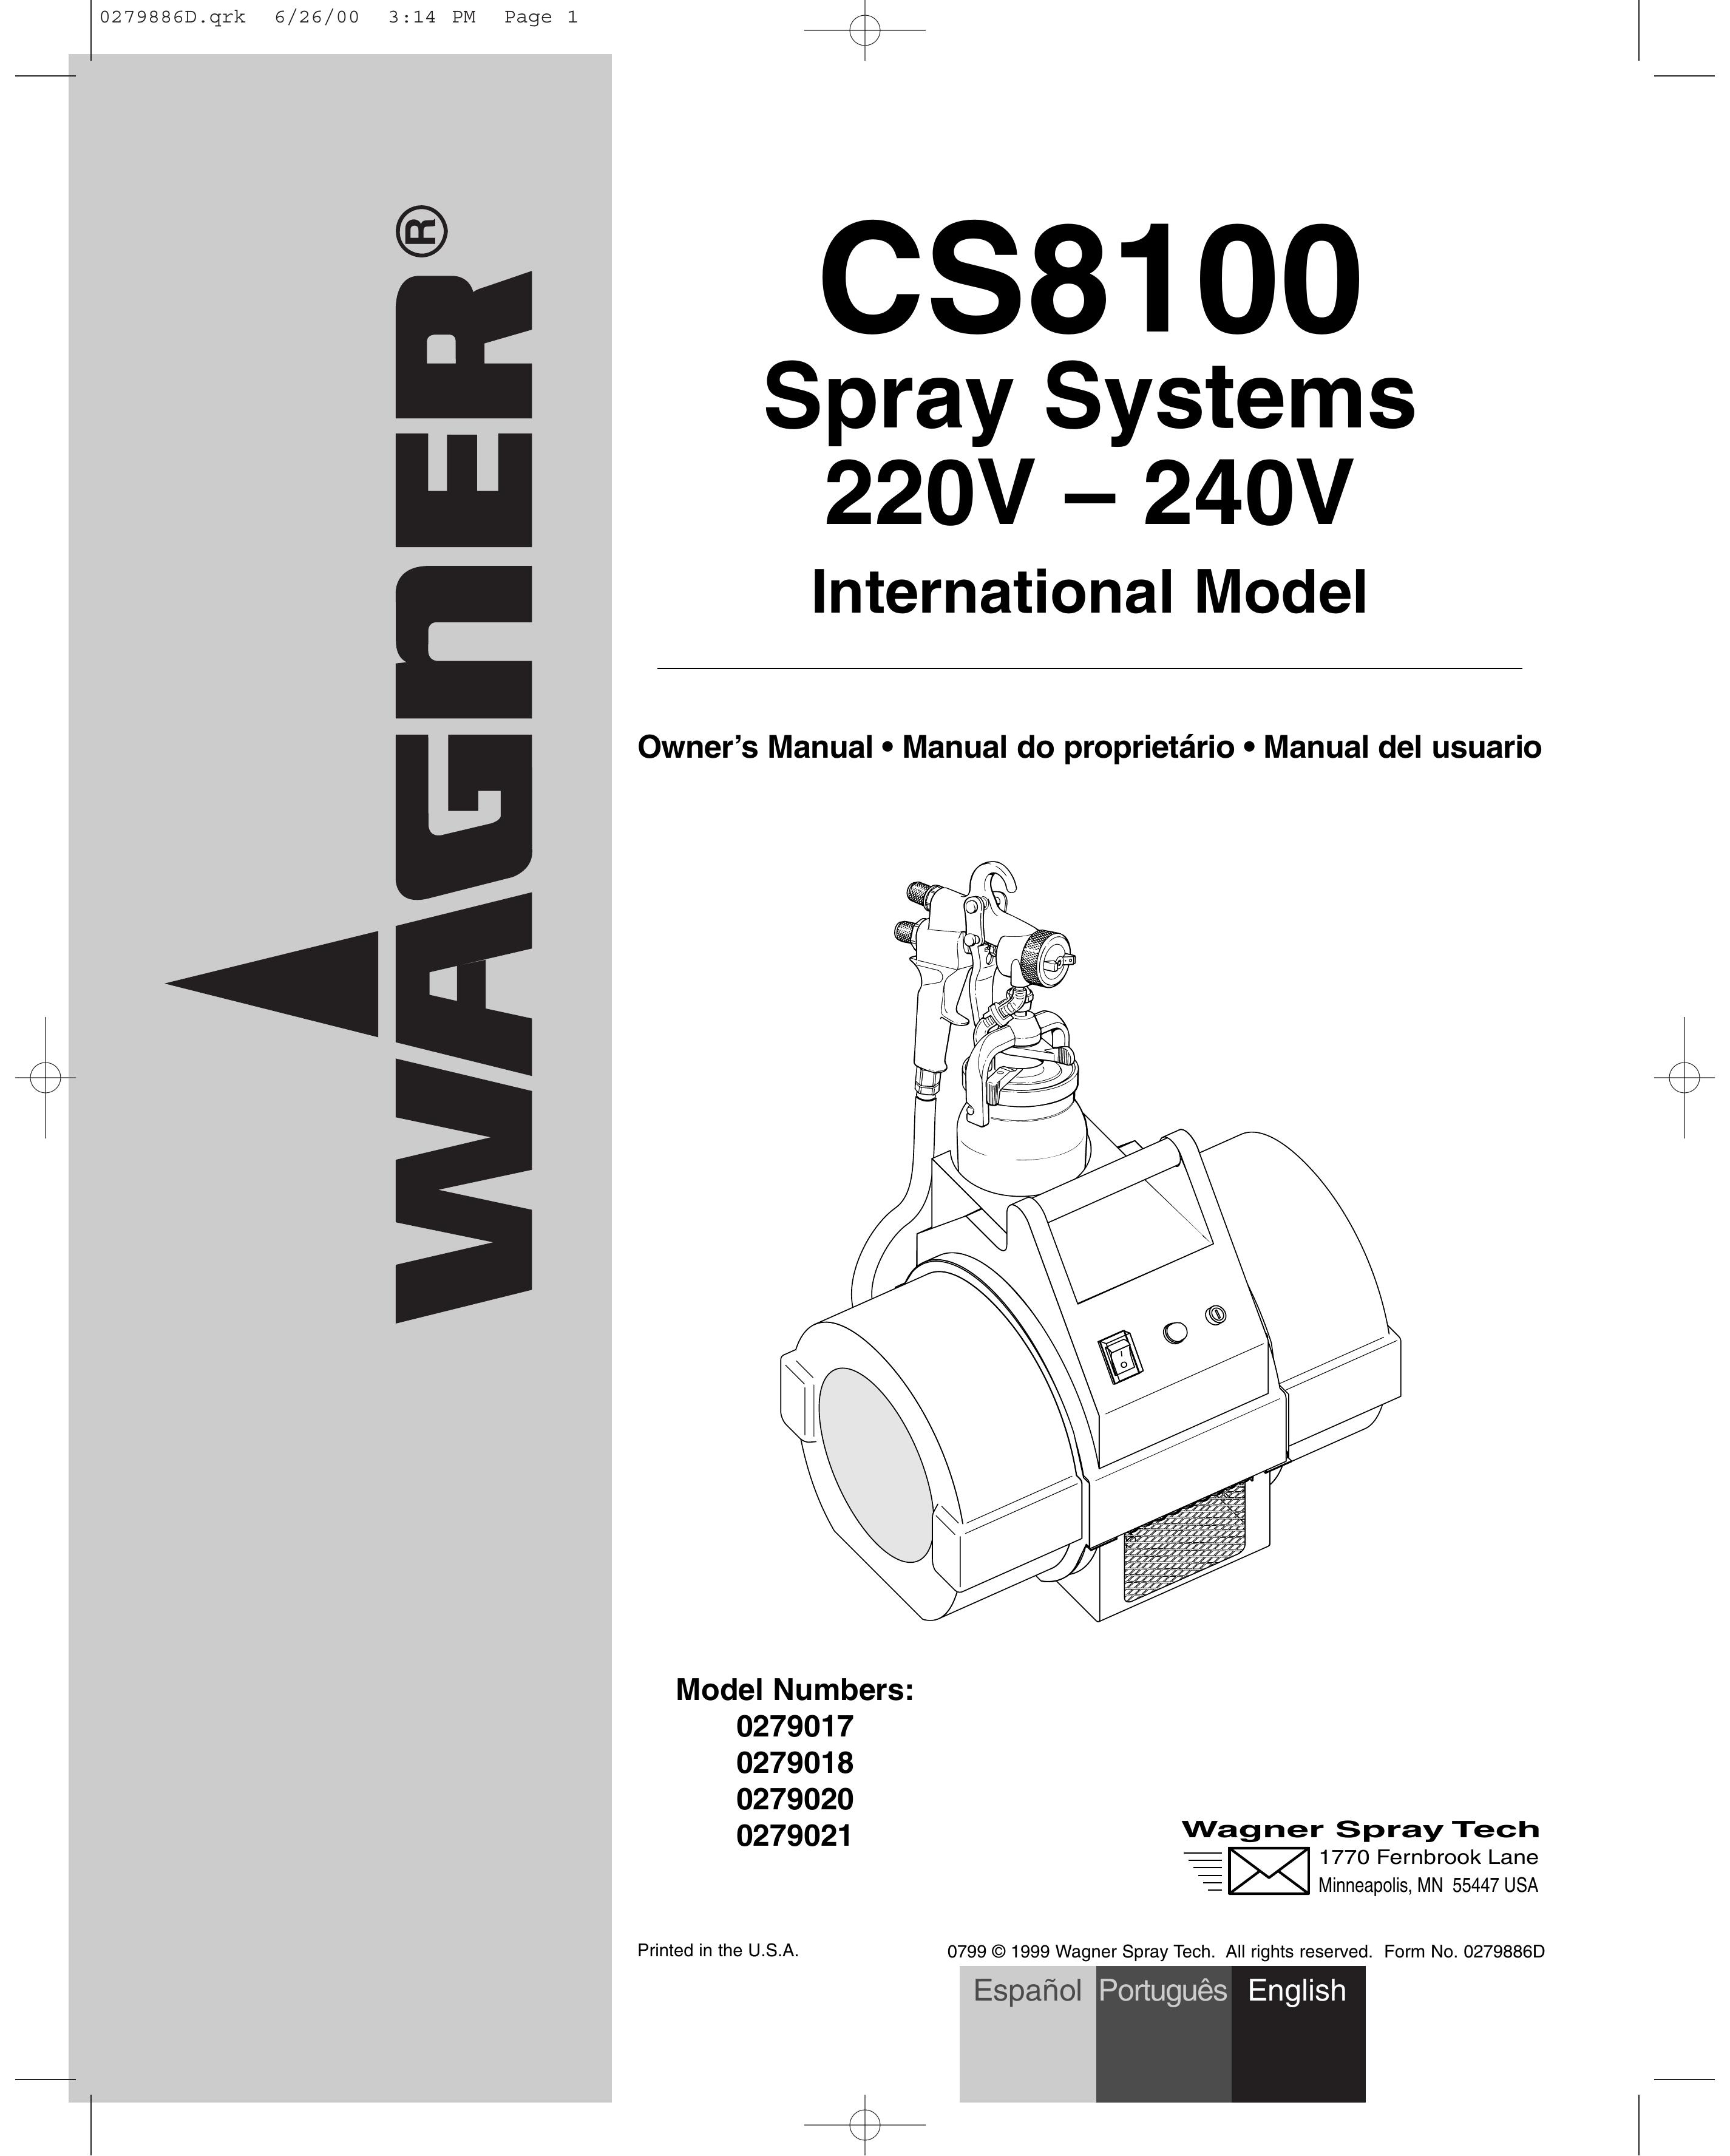 Wagner SprayTech 279020 Lawn Mower Accessory User Manual